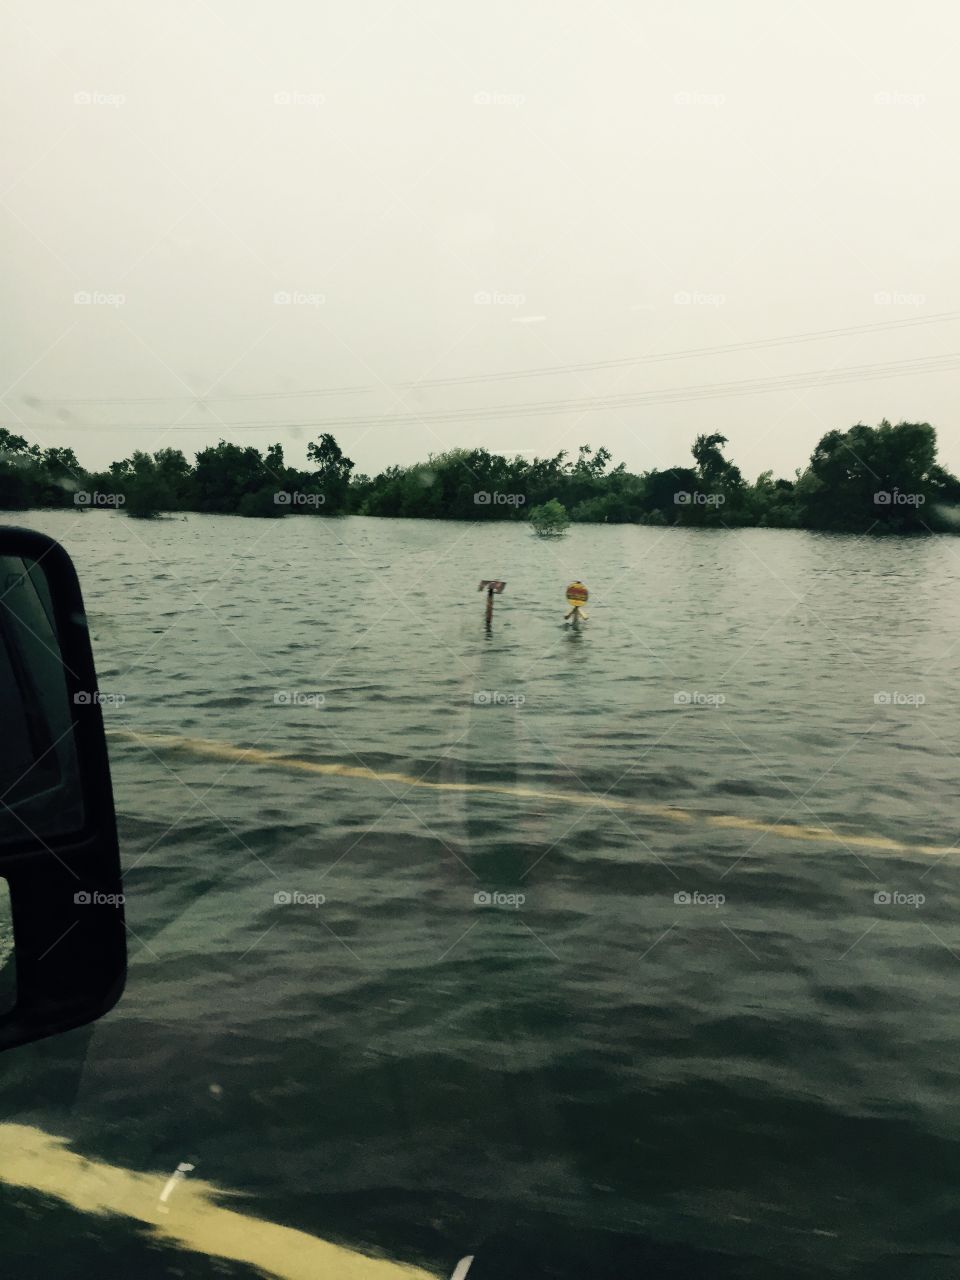 Flooding from hurricane Harvey